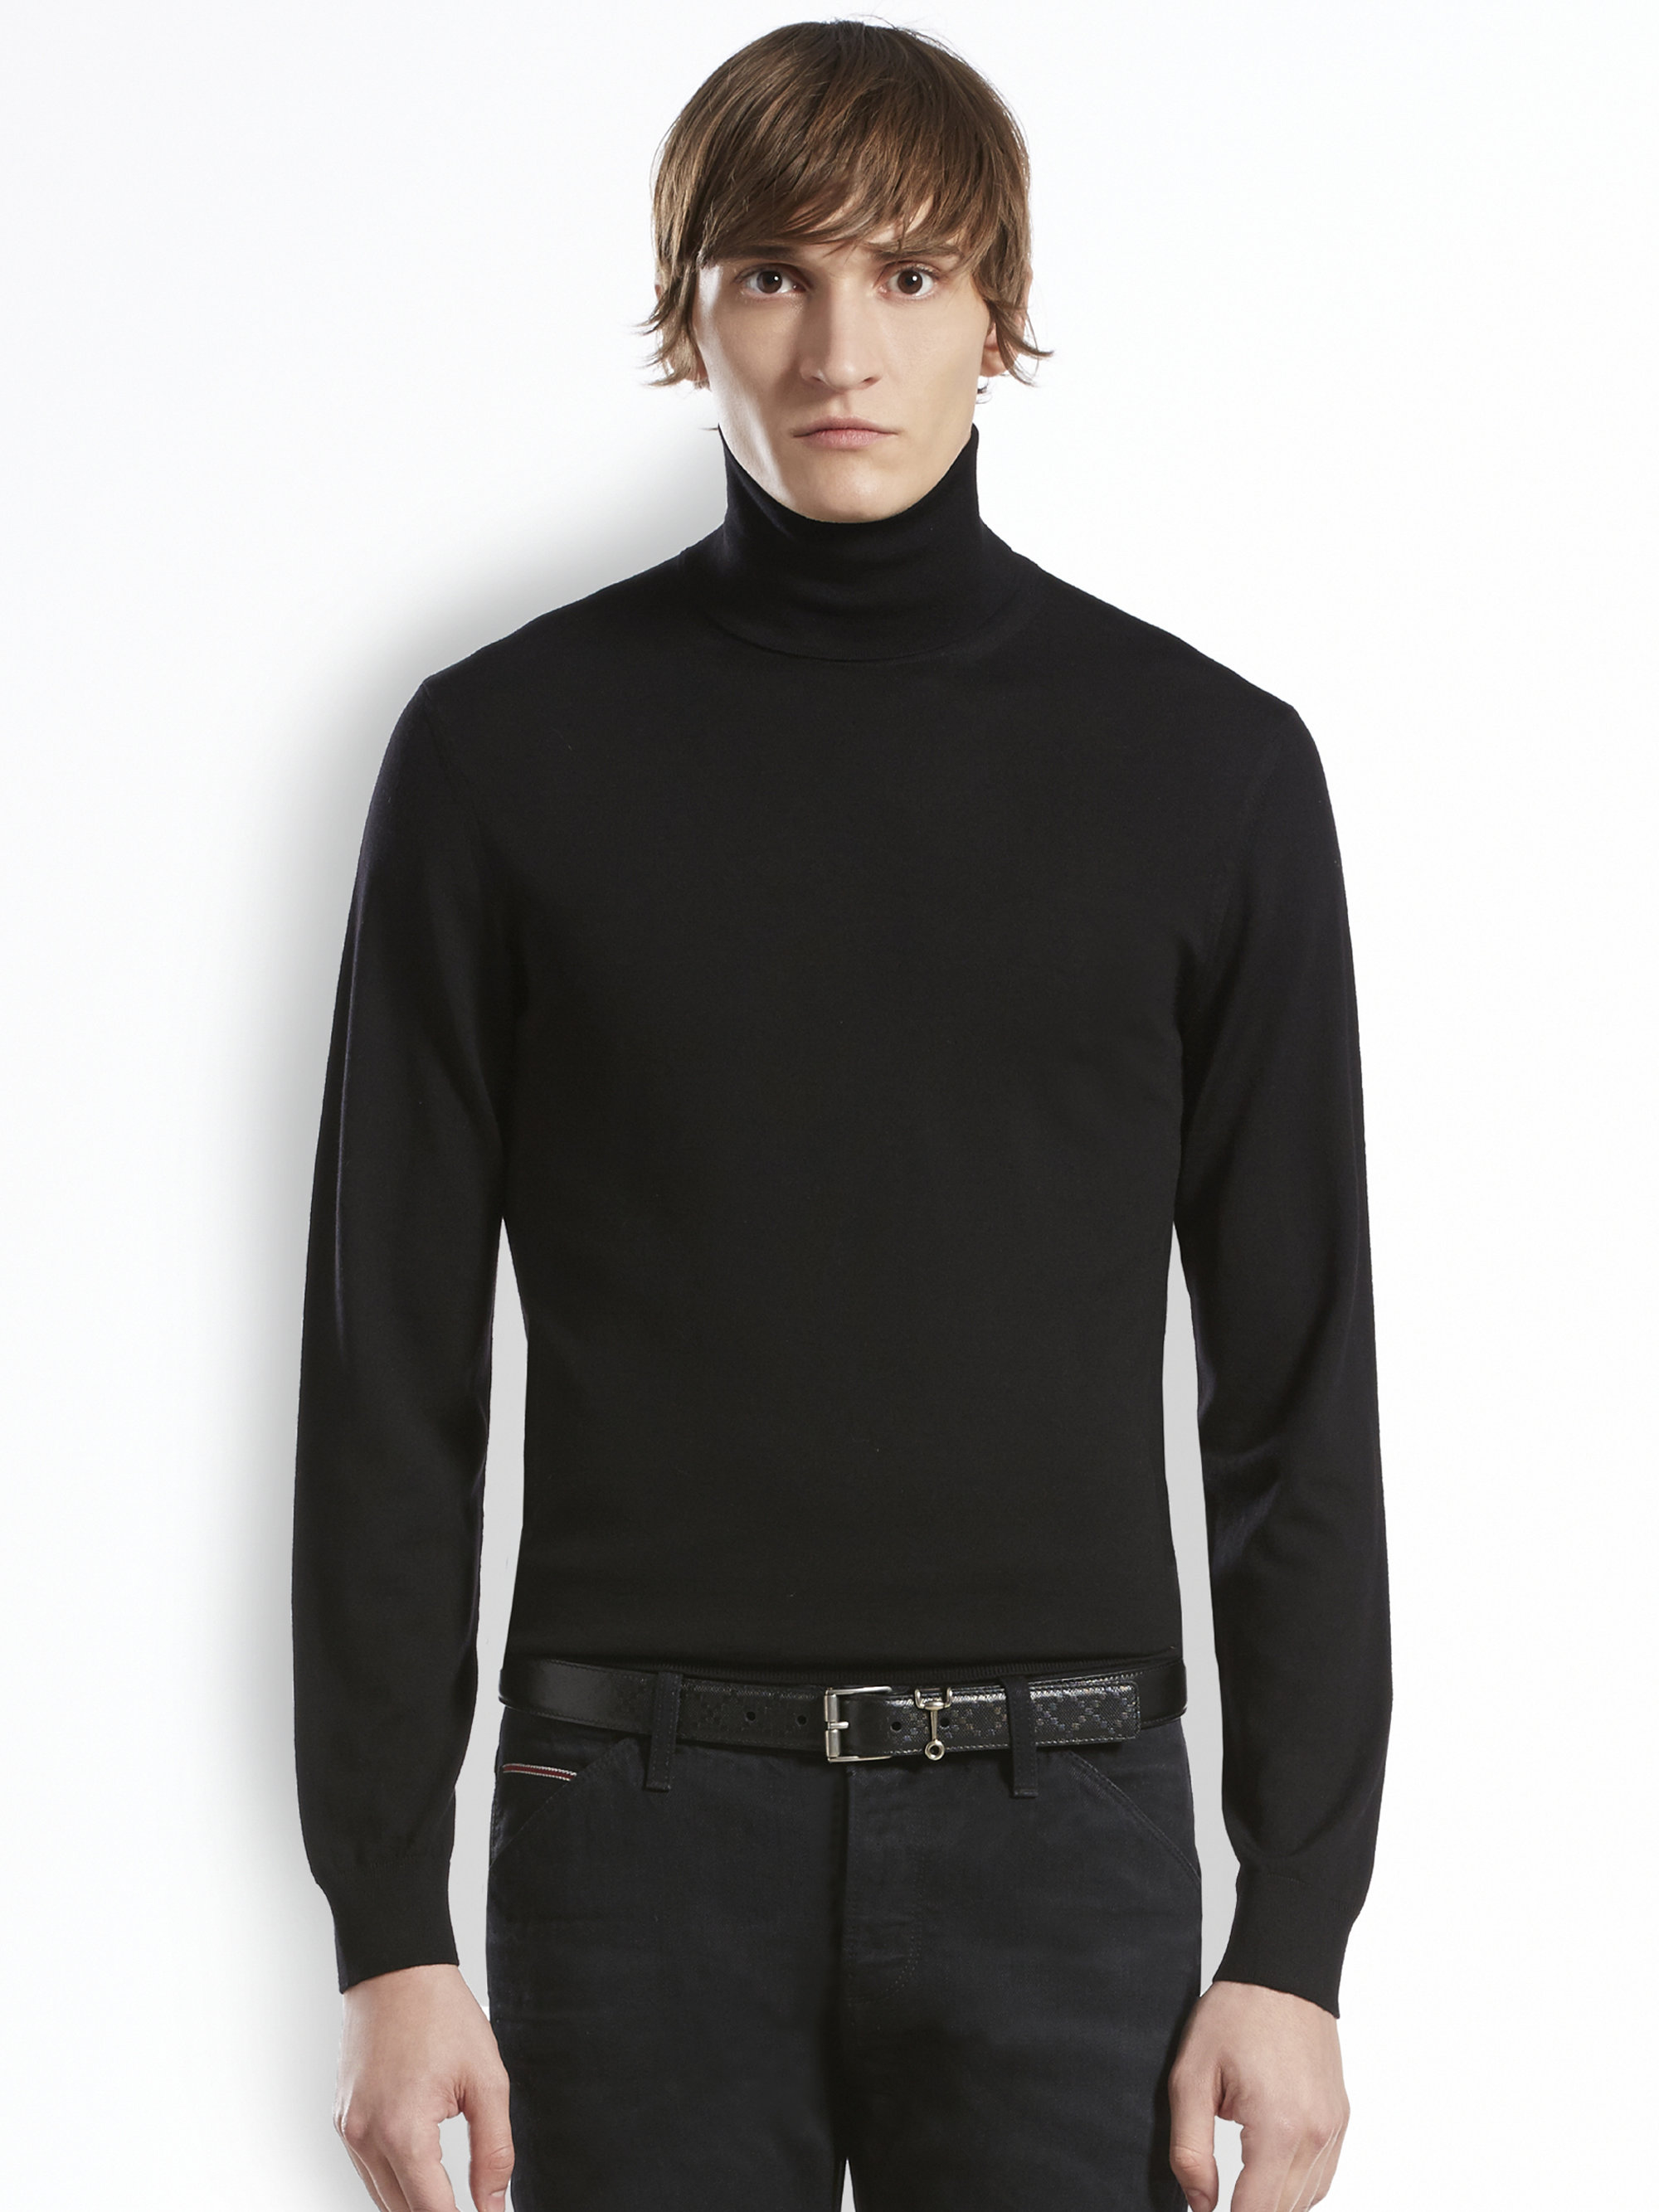 Lyst - Gucci Wool Turtleneck Sweater in Black for Men